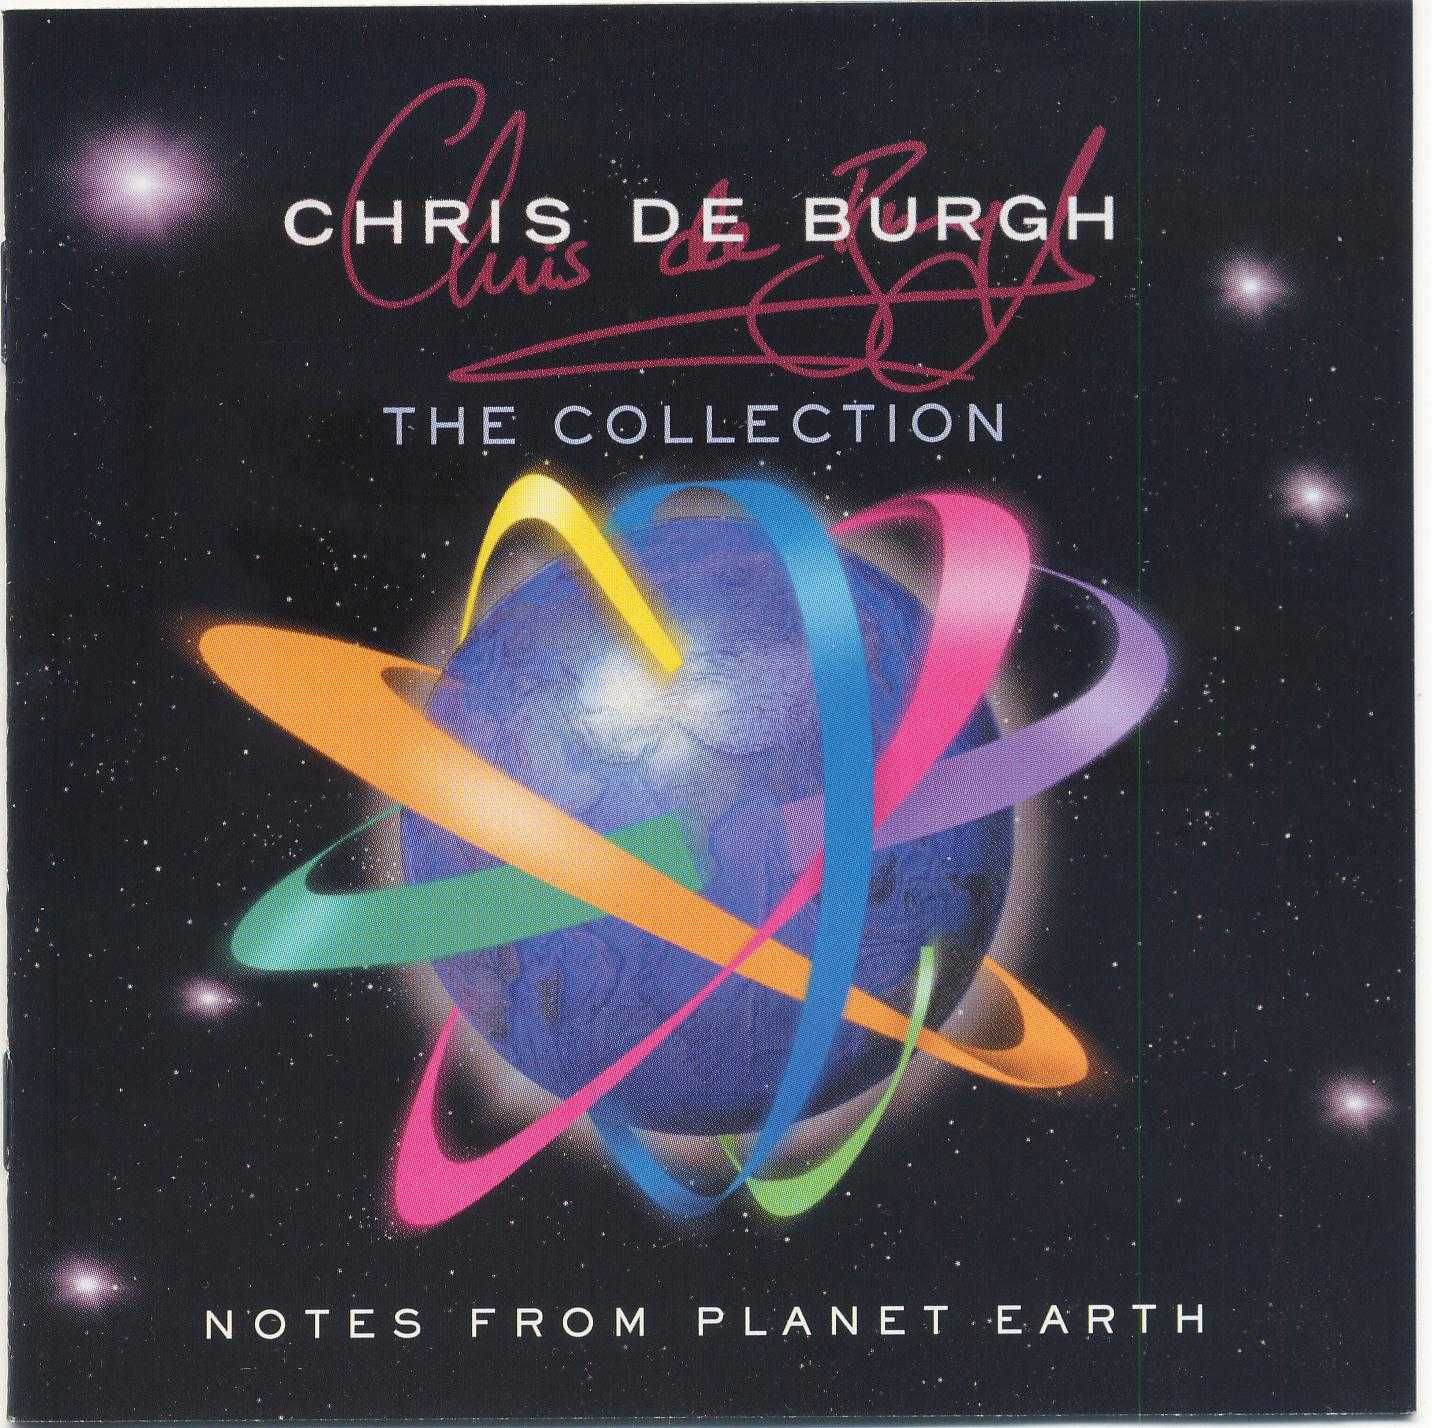 Chris de Burgh - The Collection